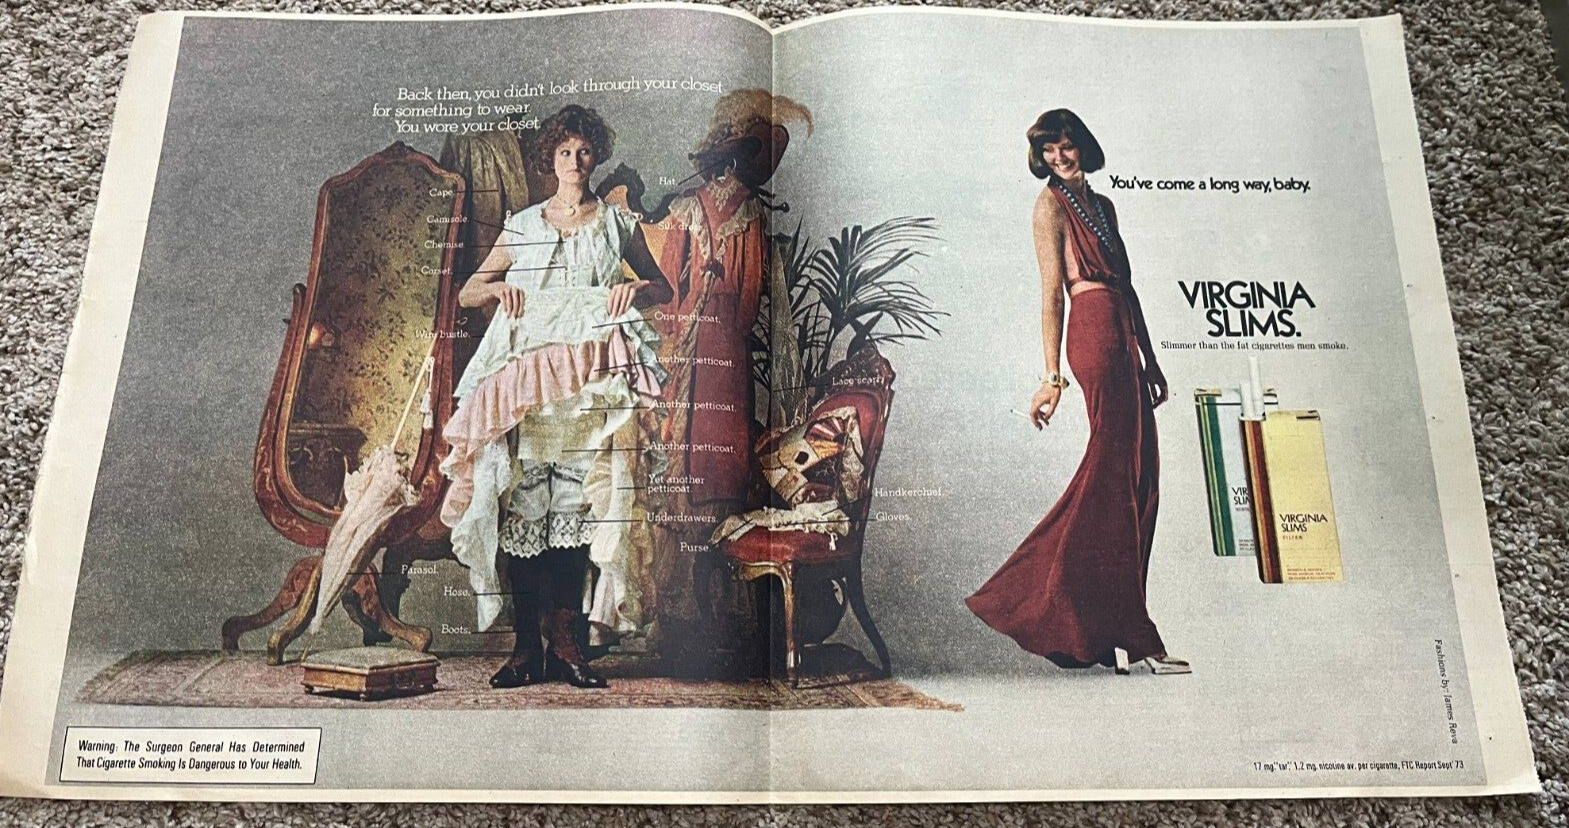 1974Virginia Slims Cigarettes 2 Page Newspaper Print Ad - Long Way Baby